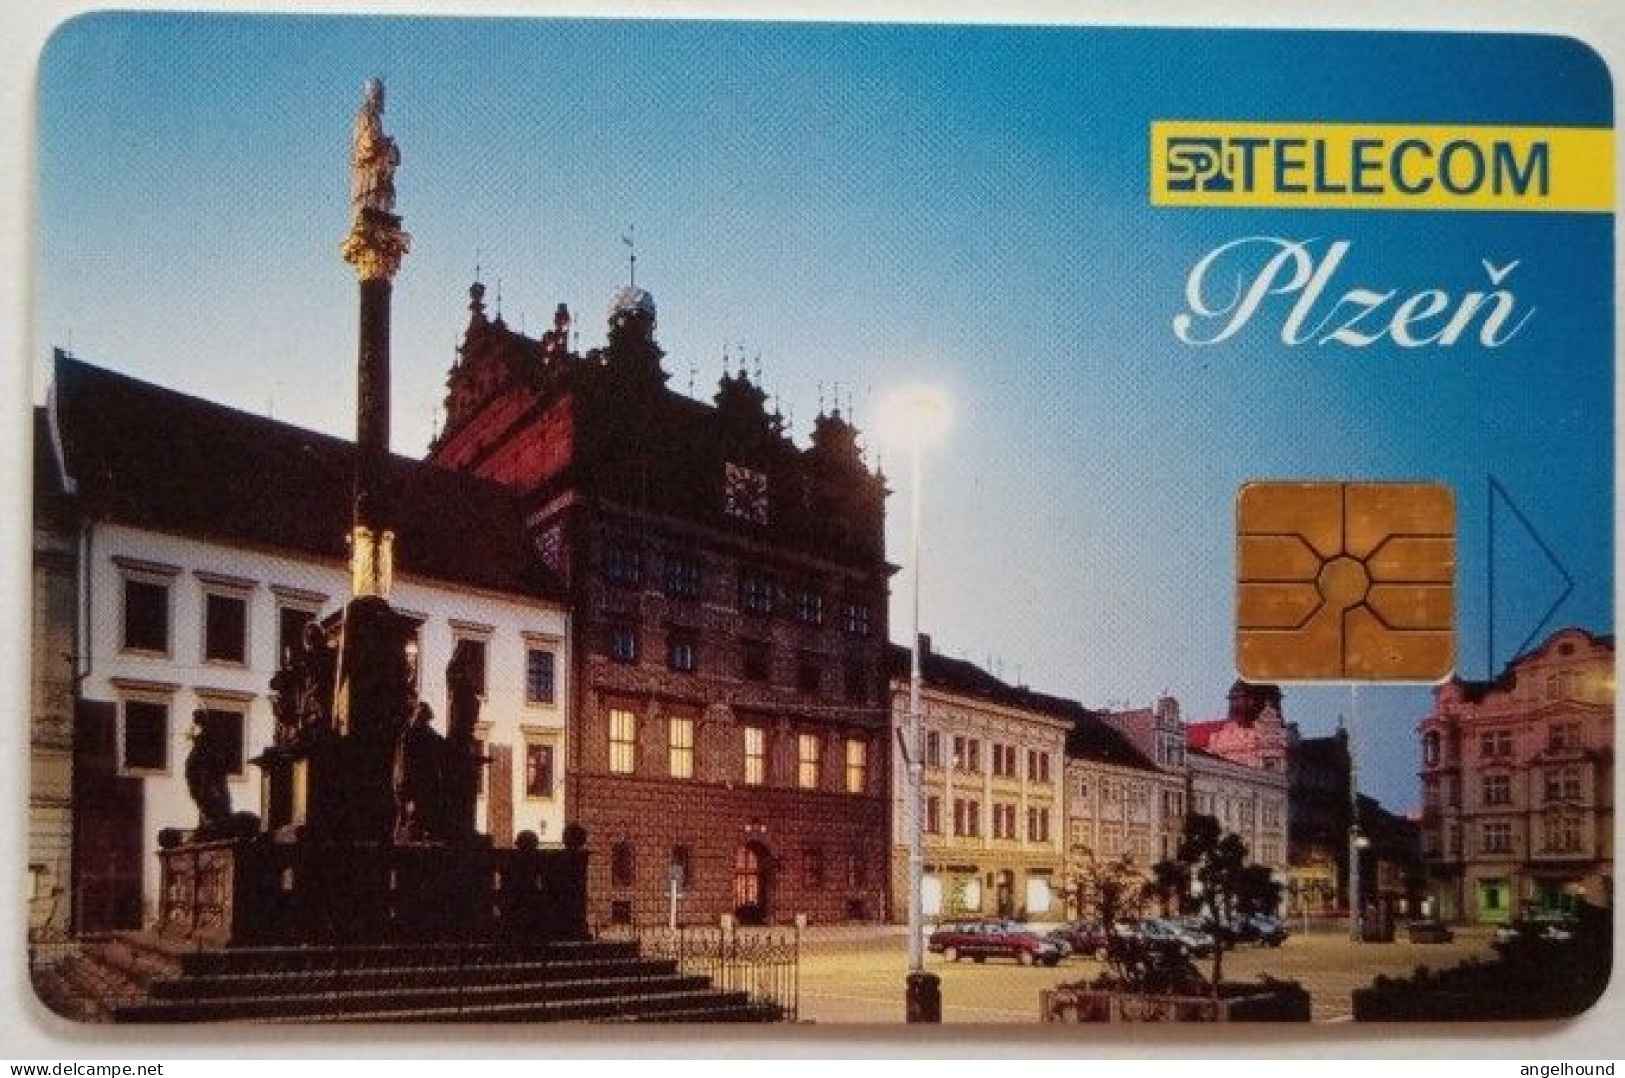 Czech Republic 50 Units Chip Card - Town Plzen - Repubblica Ceca